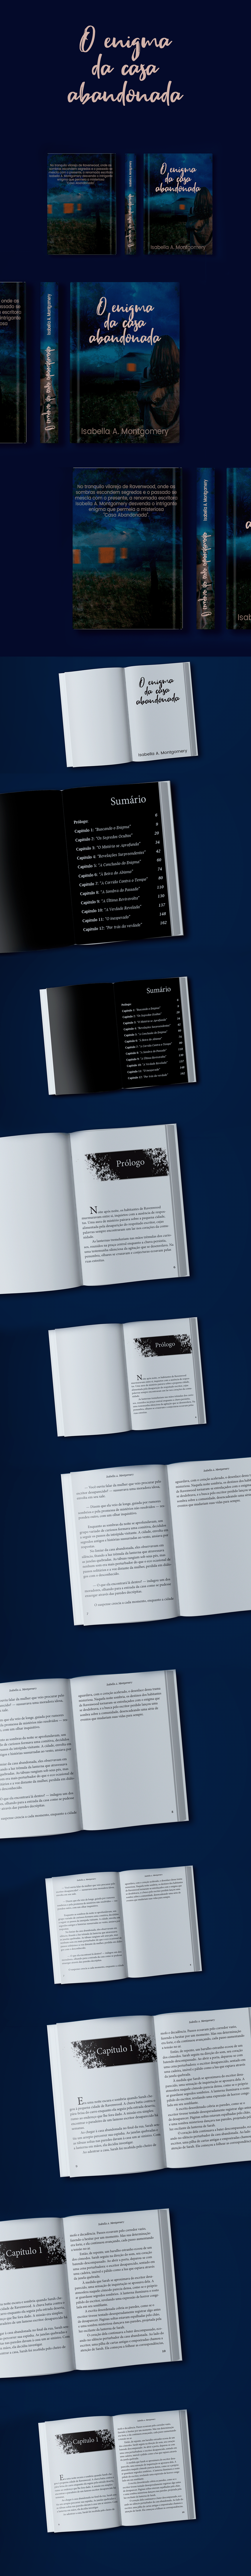 text book cover design editorial InDesign